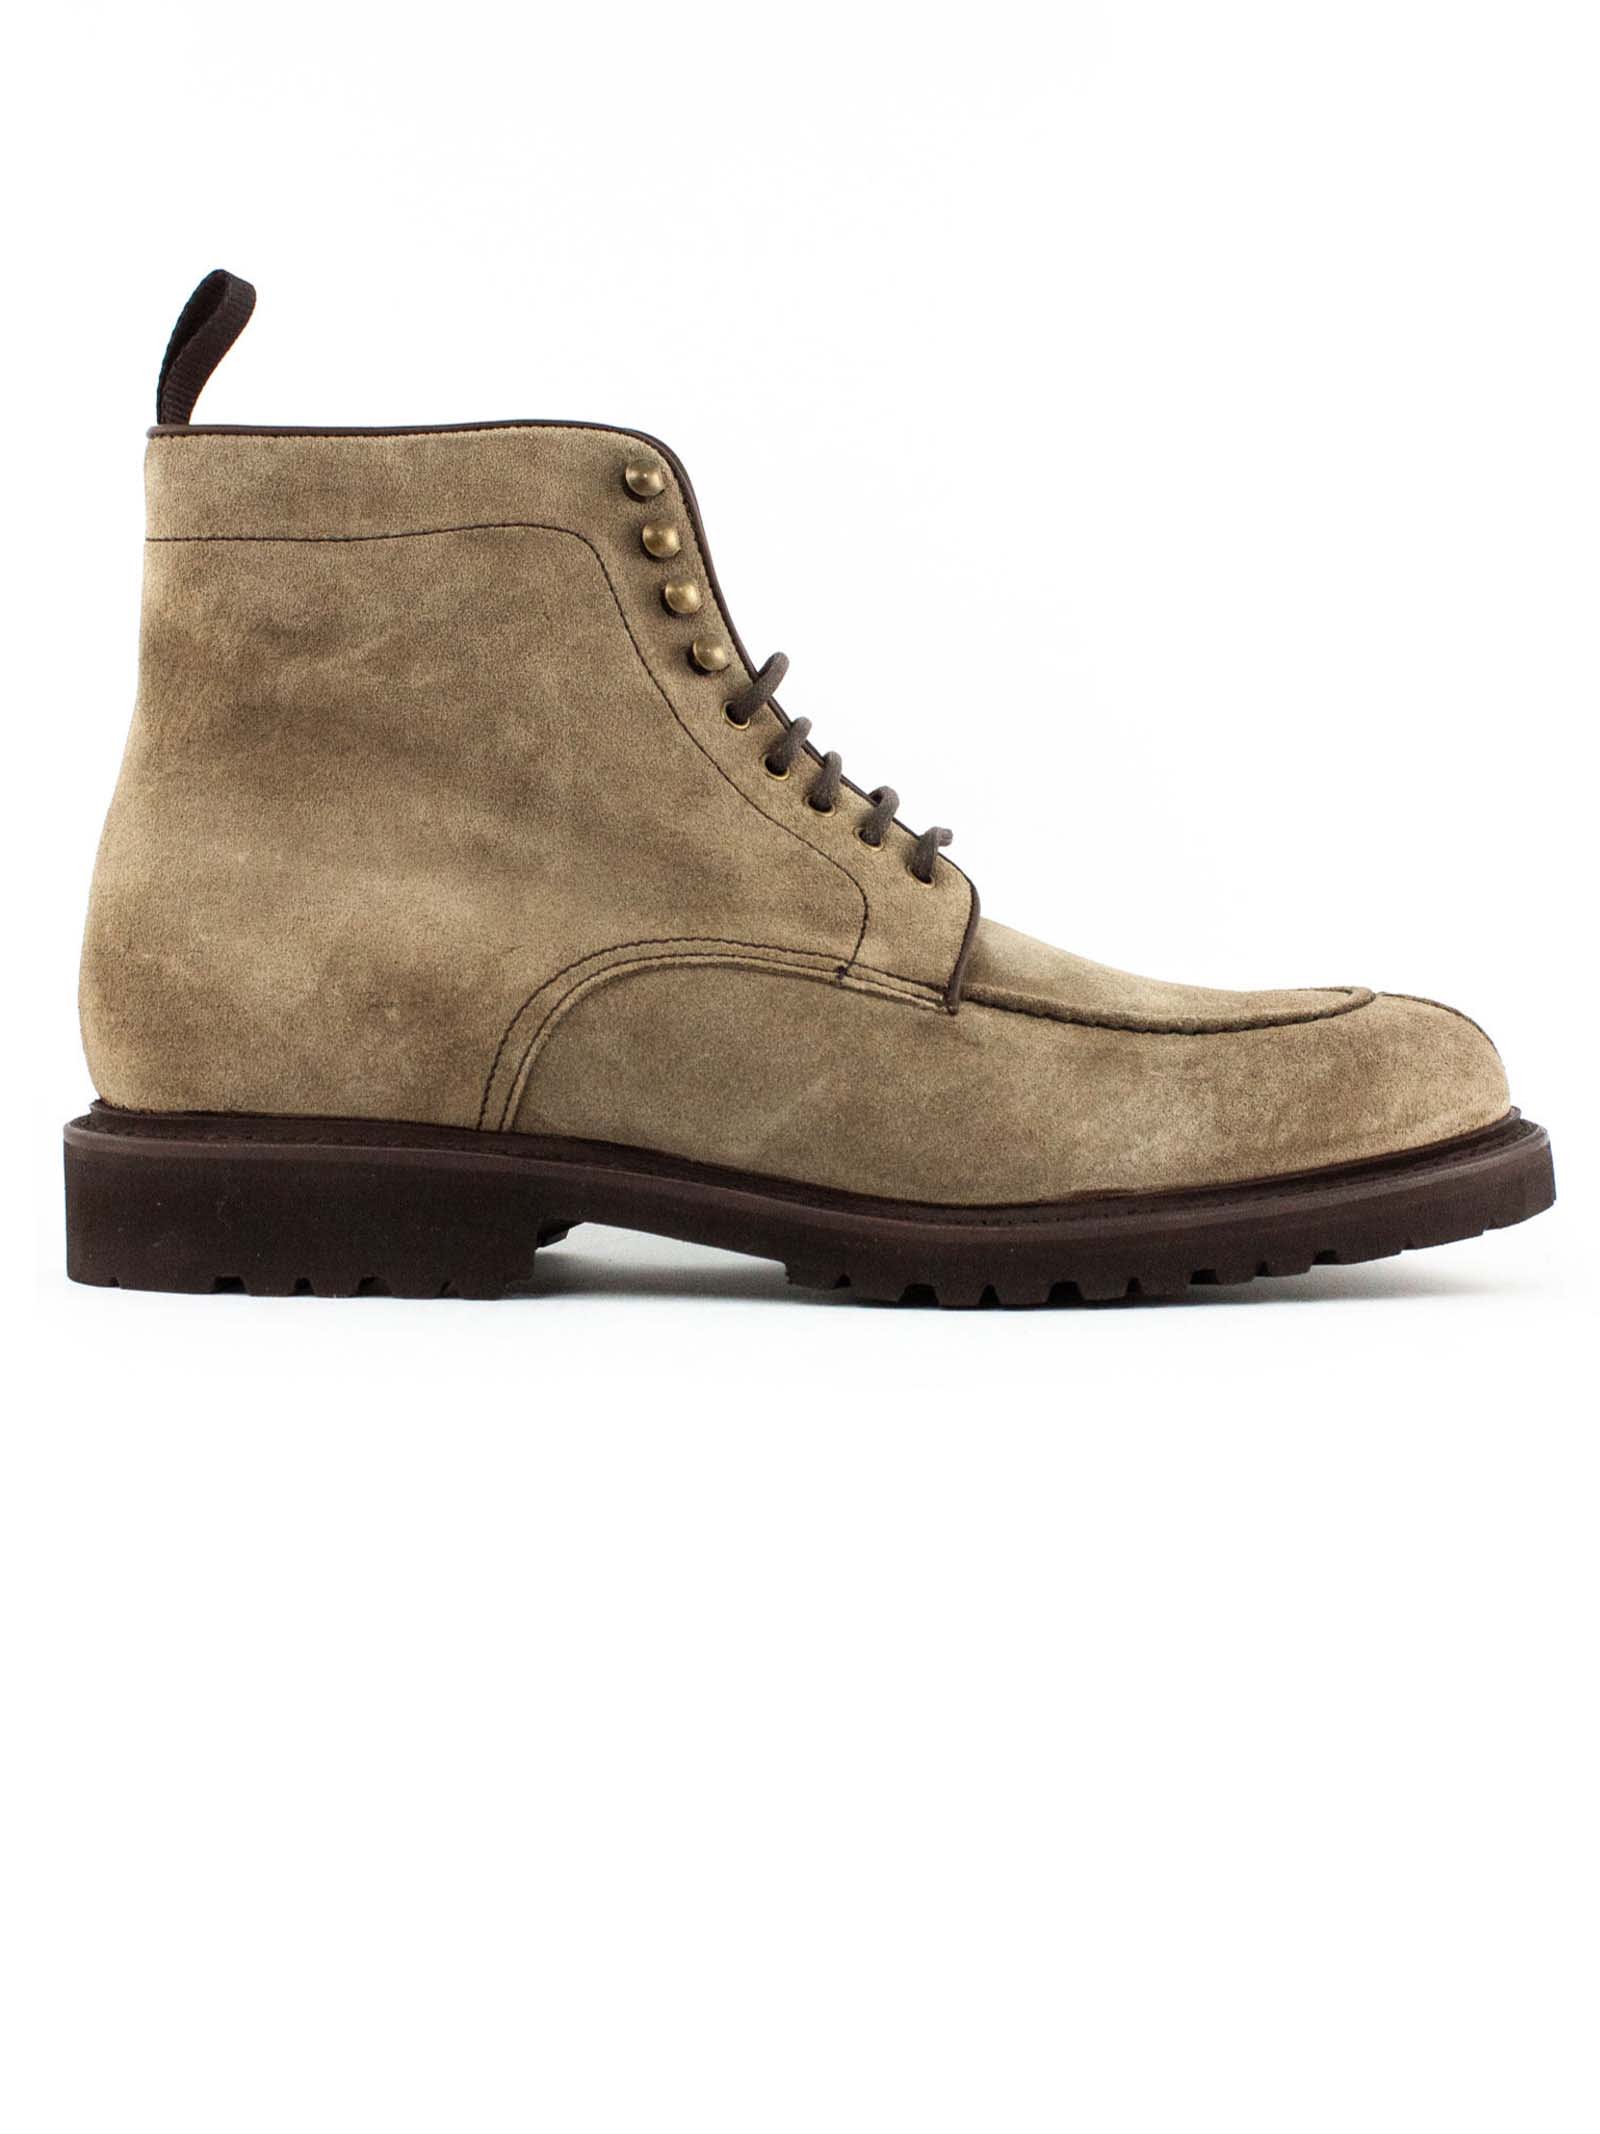 Berwick 1707 Beige Leather Boots